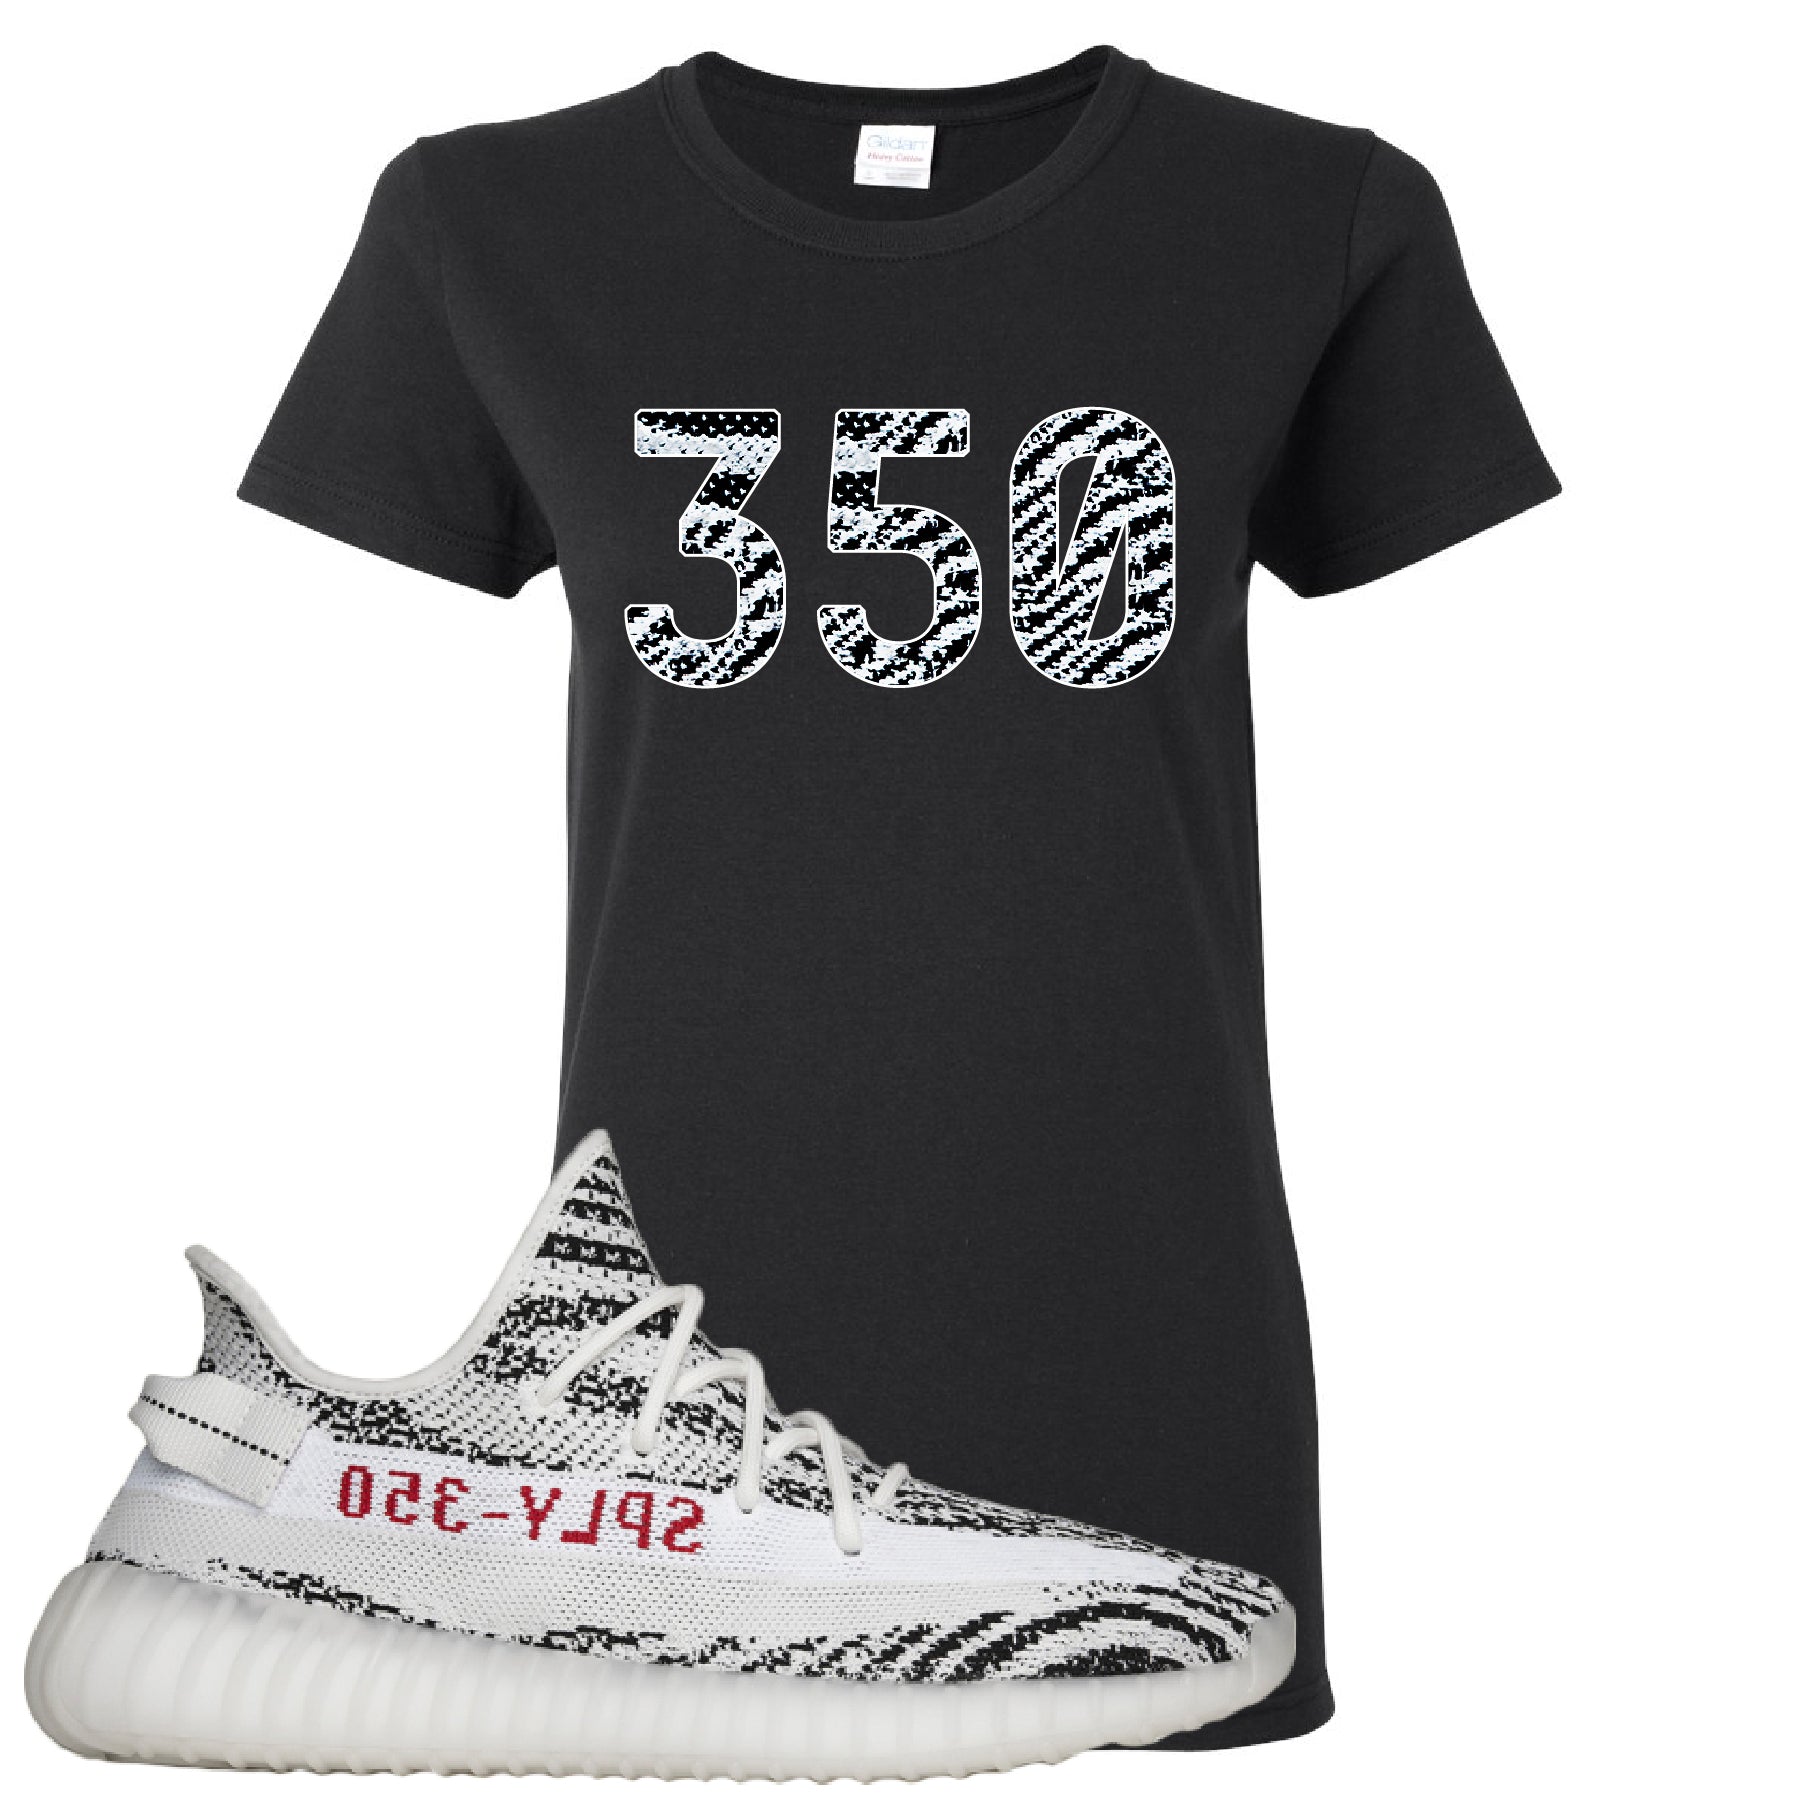 Yeezy Boost 350 V2 Zebra 350 Black Sneaker Hook Up Women S T Shirt